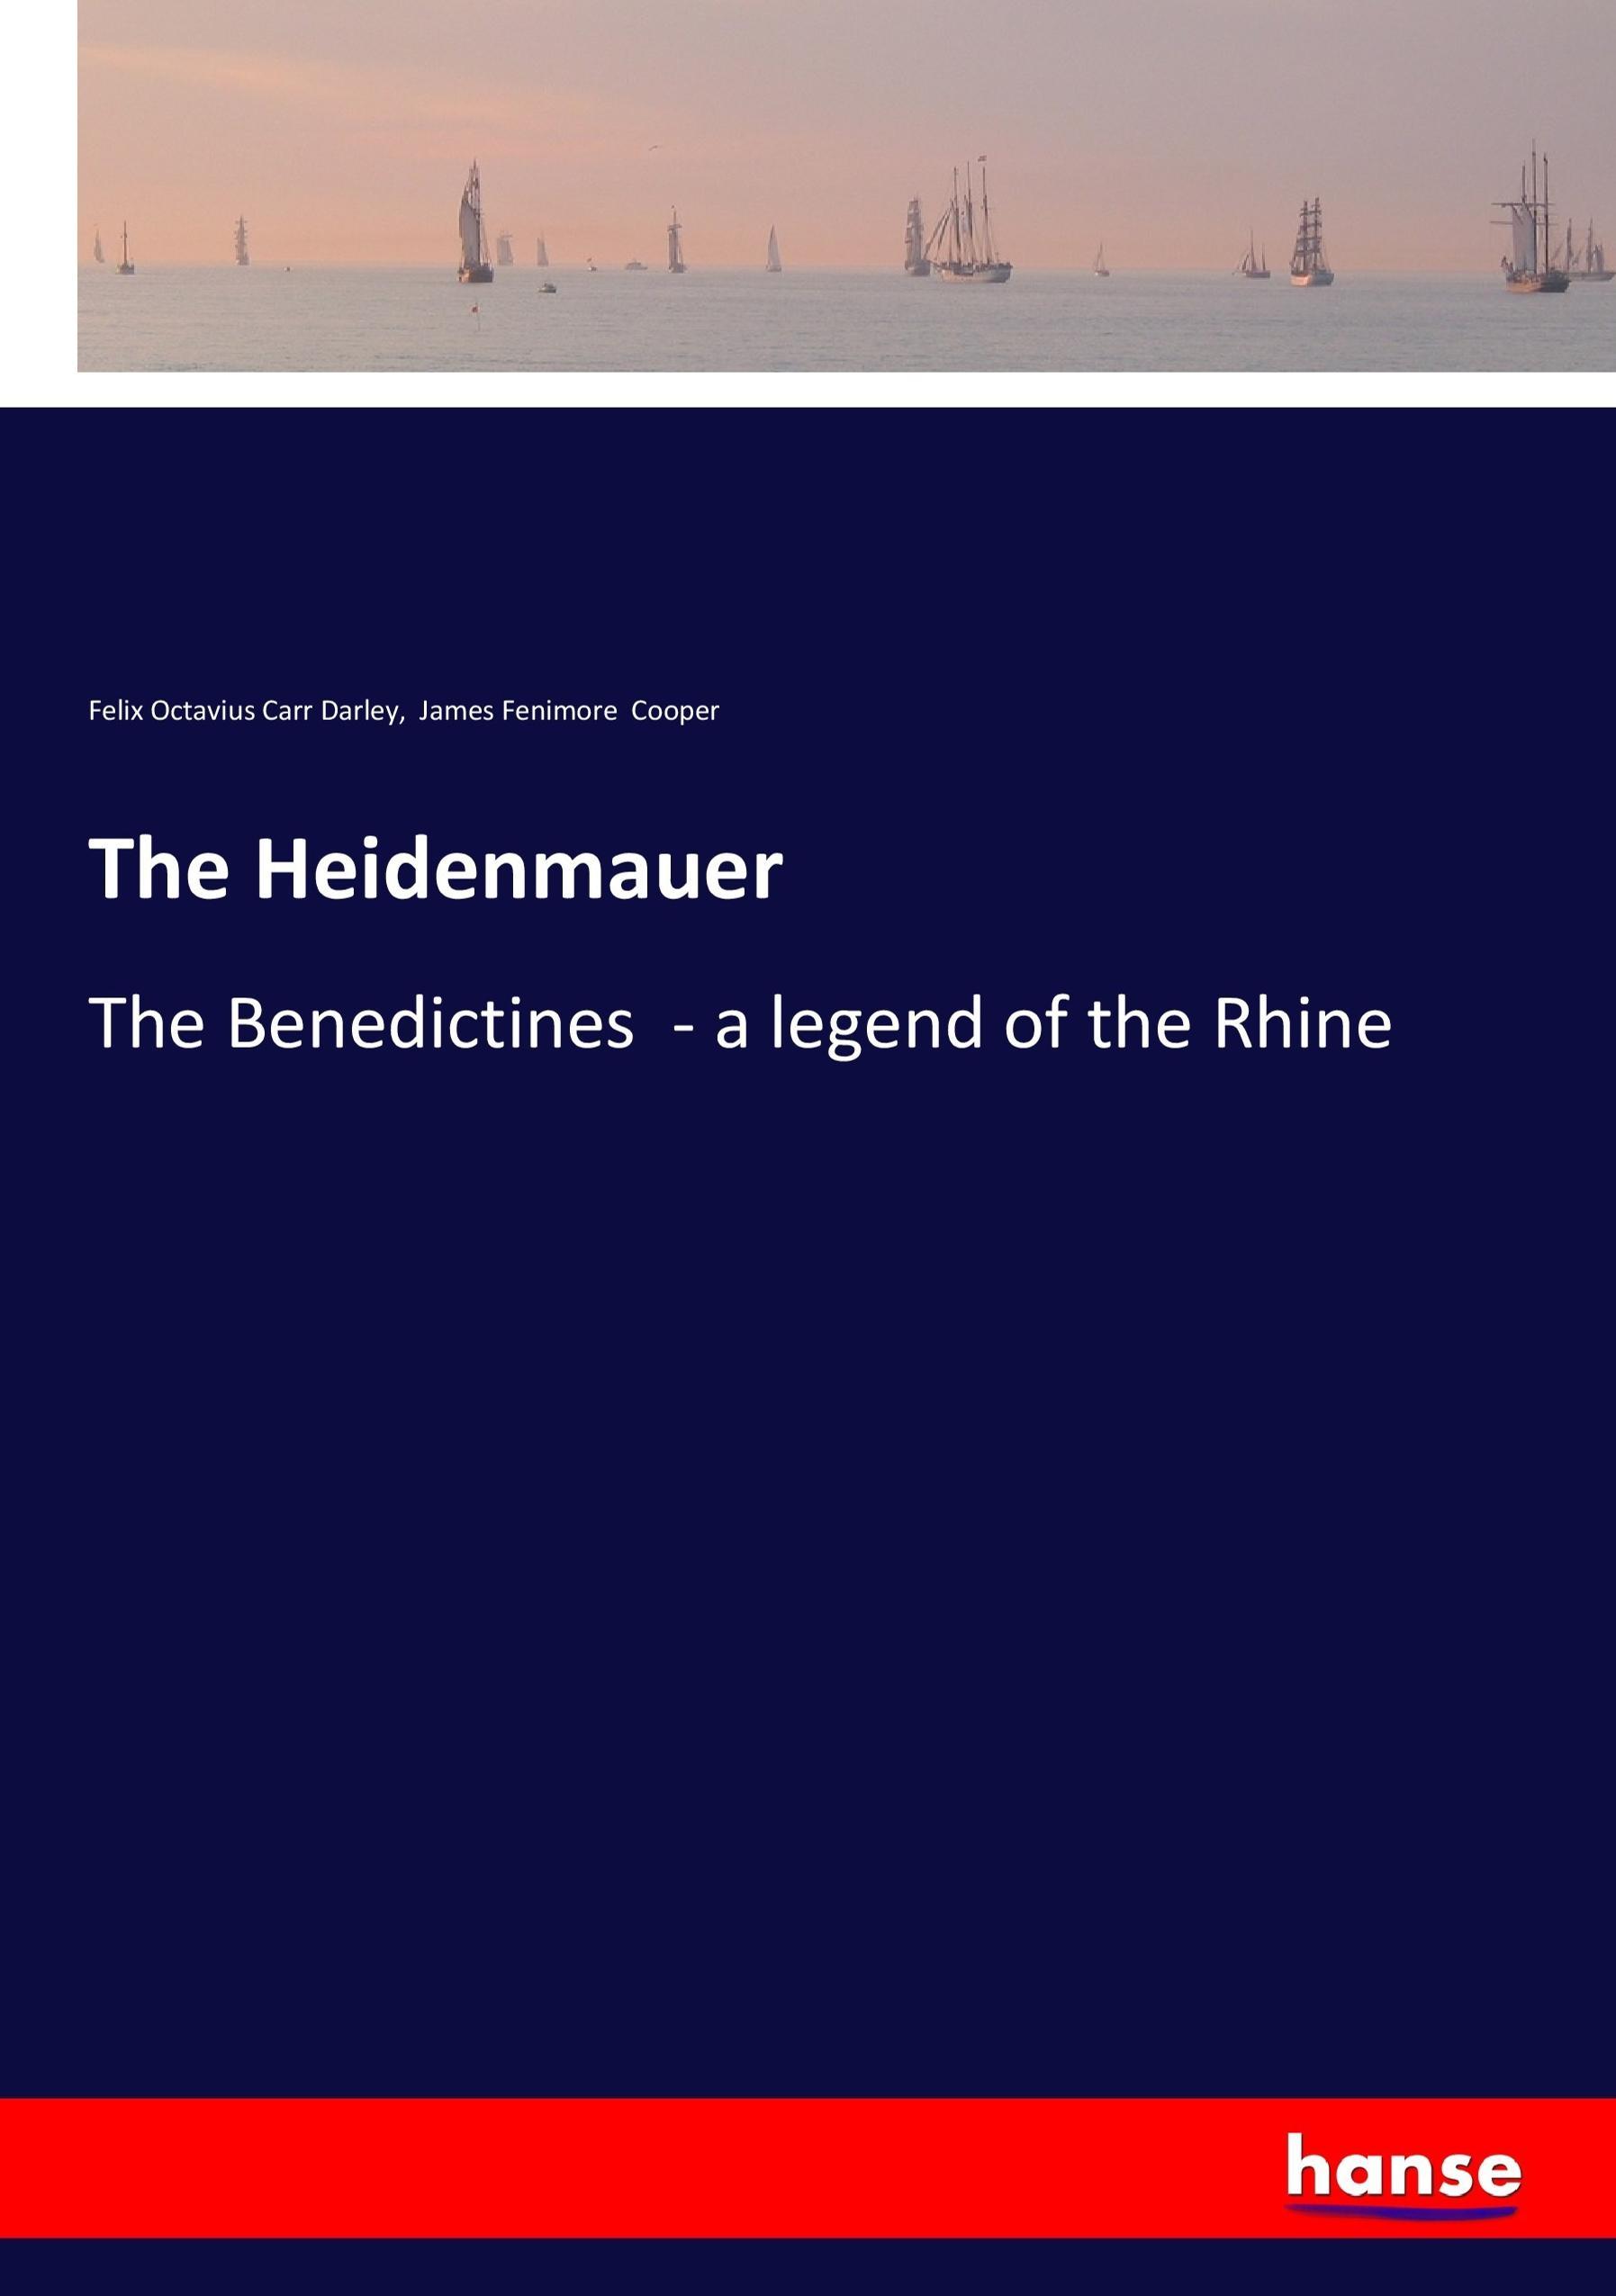 The Heidenmauer / The Benedictines - a legend of the Rhine / Felix Octavius Carr Darley (u. a.) / Taschenbuch / Paperback / 468 S. / Englisch / 2017 / hansebooks / EAN 9783337377540 - Darley, Felix Octavius Carr